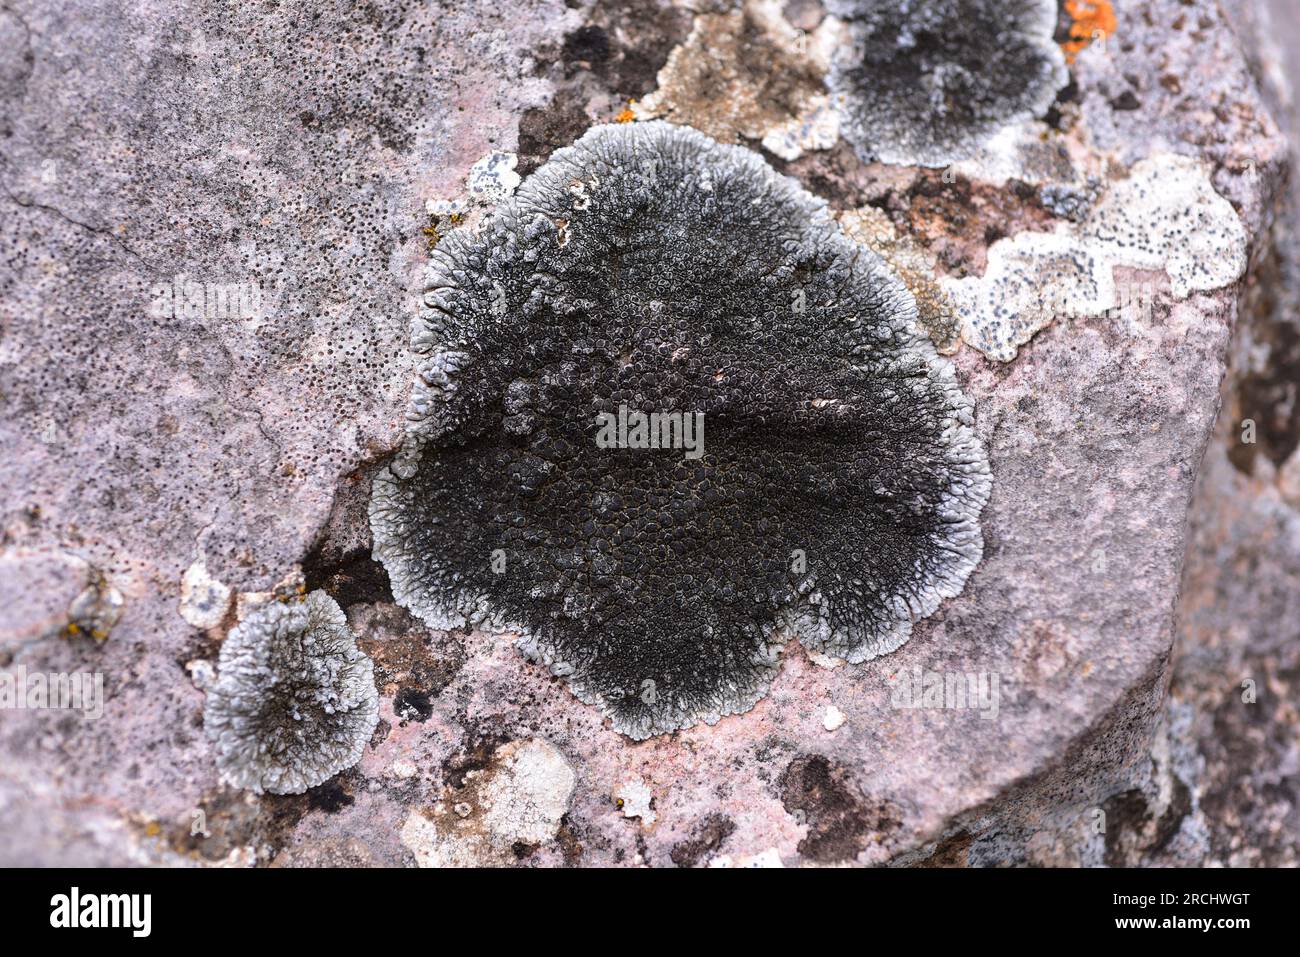 Lobothallia radiosa or Lecanora radiosa is a crustose lichen that grows on calcareous rocks. This photo was taken in Alquézar, Huesca, Aragón, Spain. Stock Photo